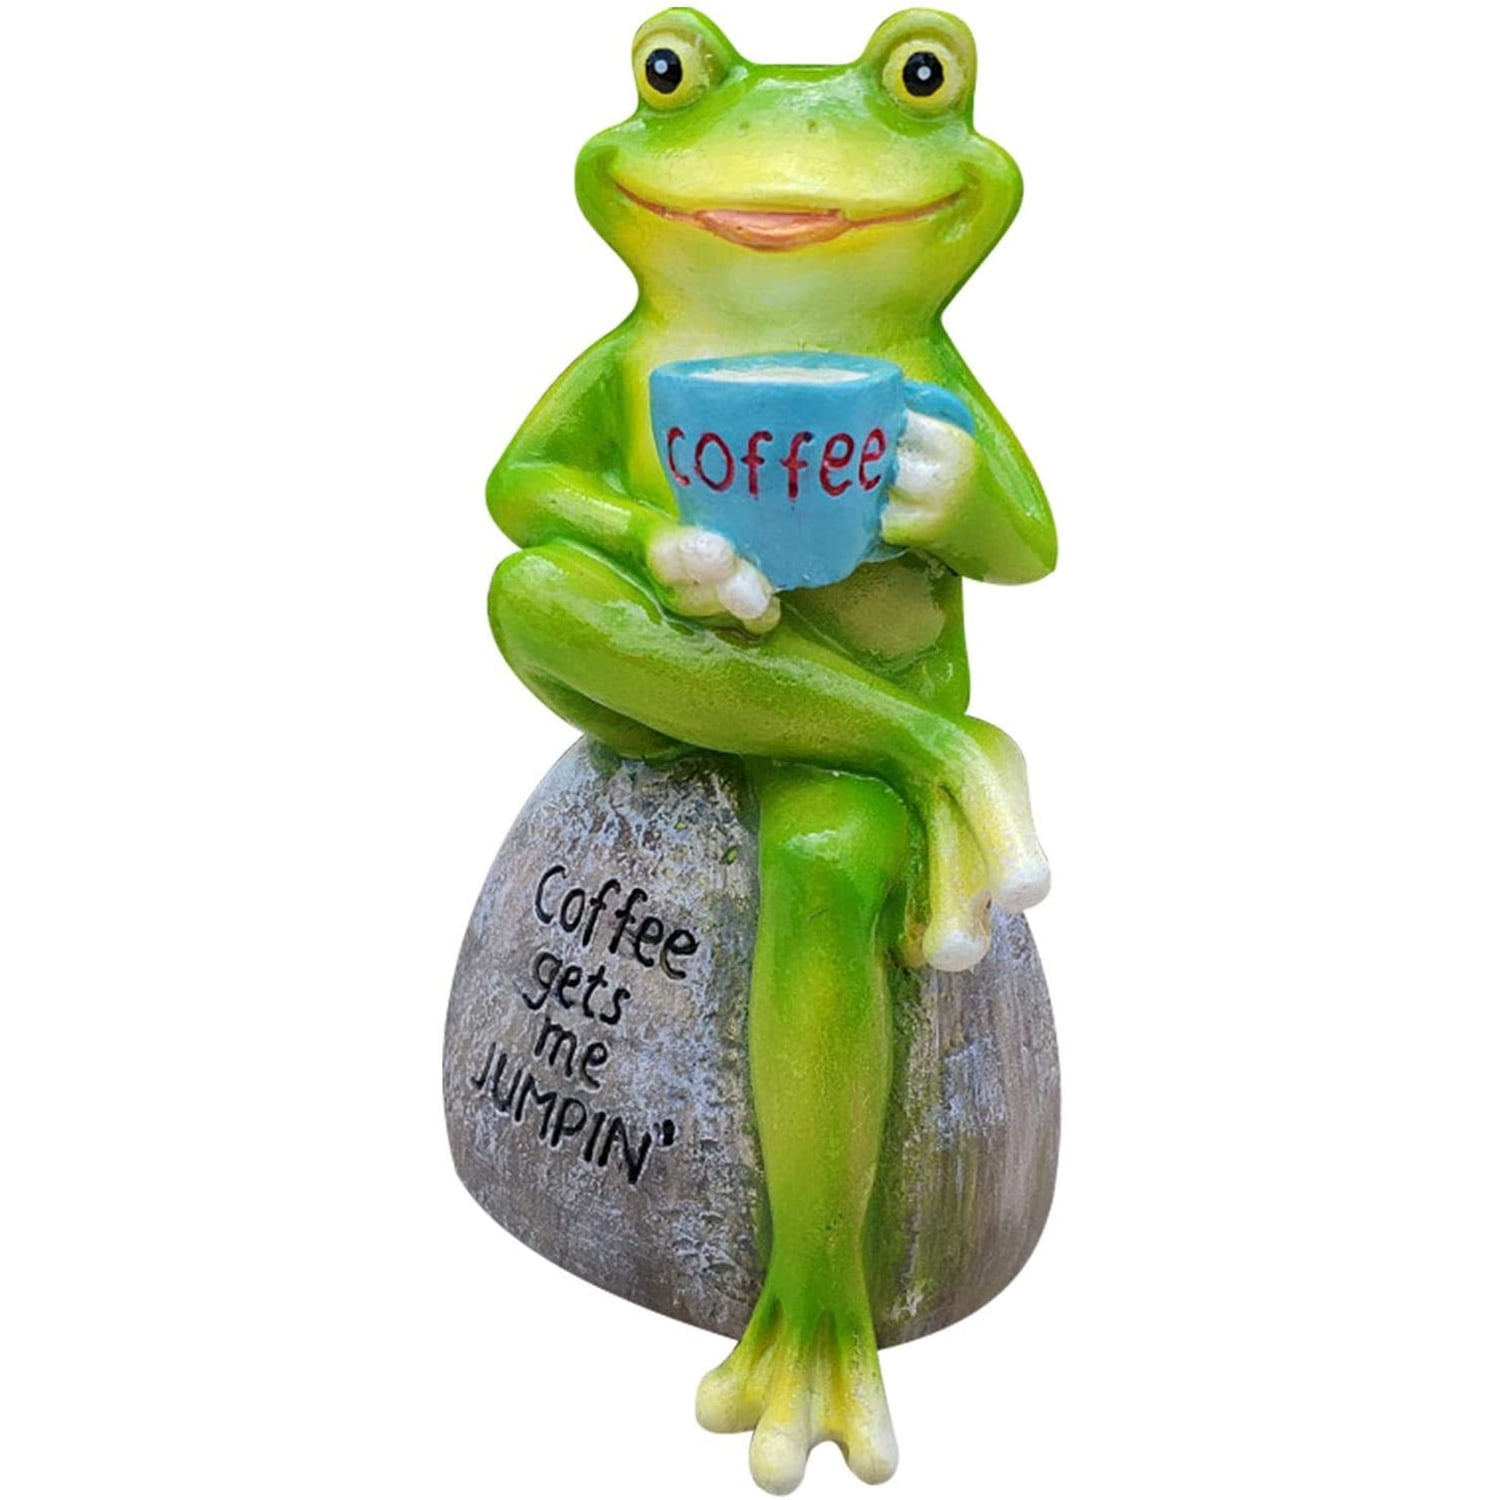 Green Frog Standing Statue Figurine Sculpture Home Table Top Desk Decor Gift 